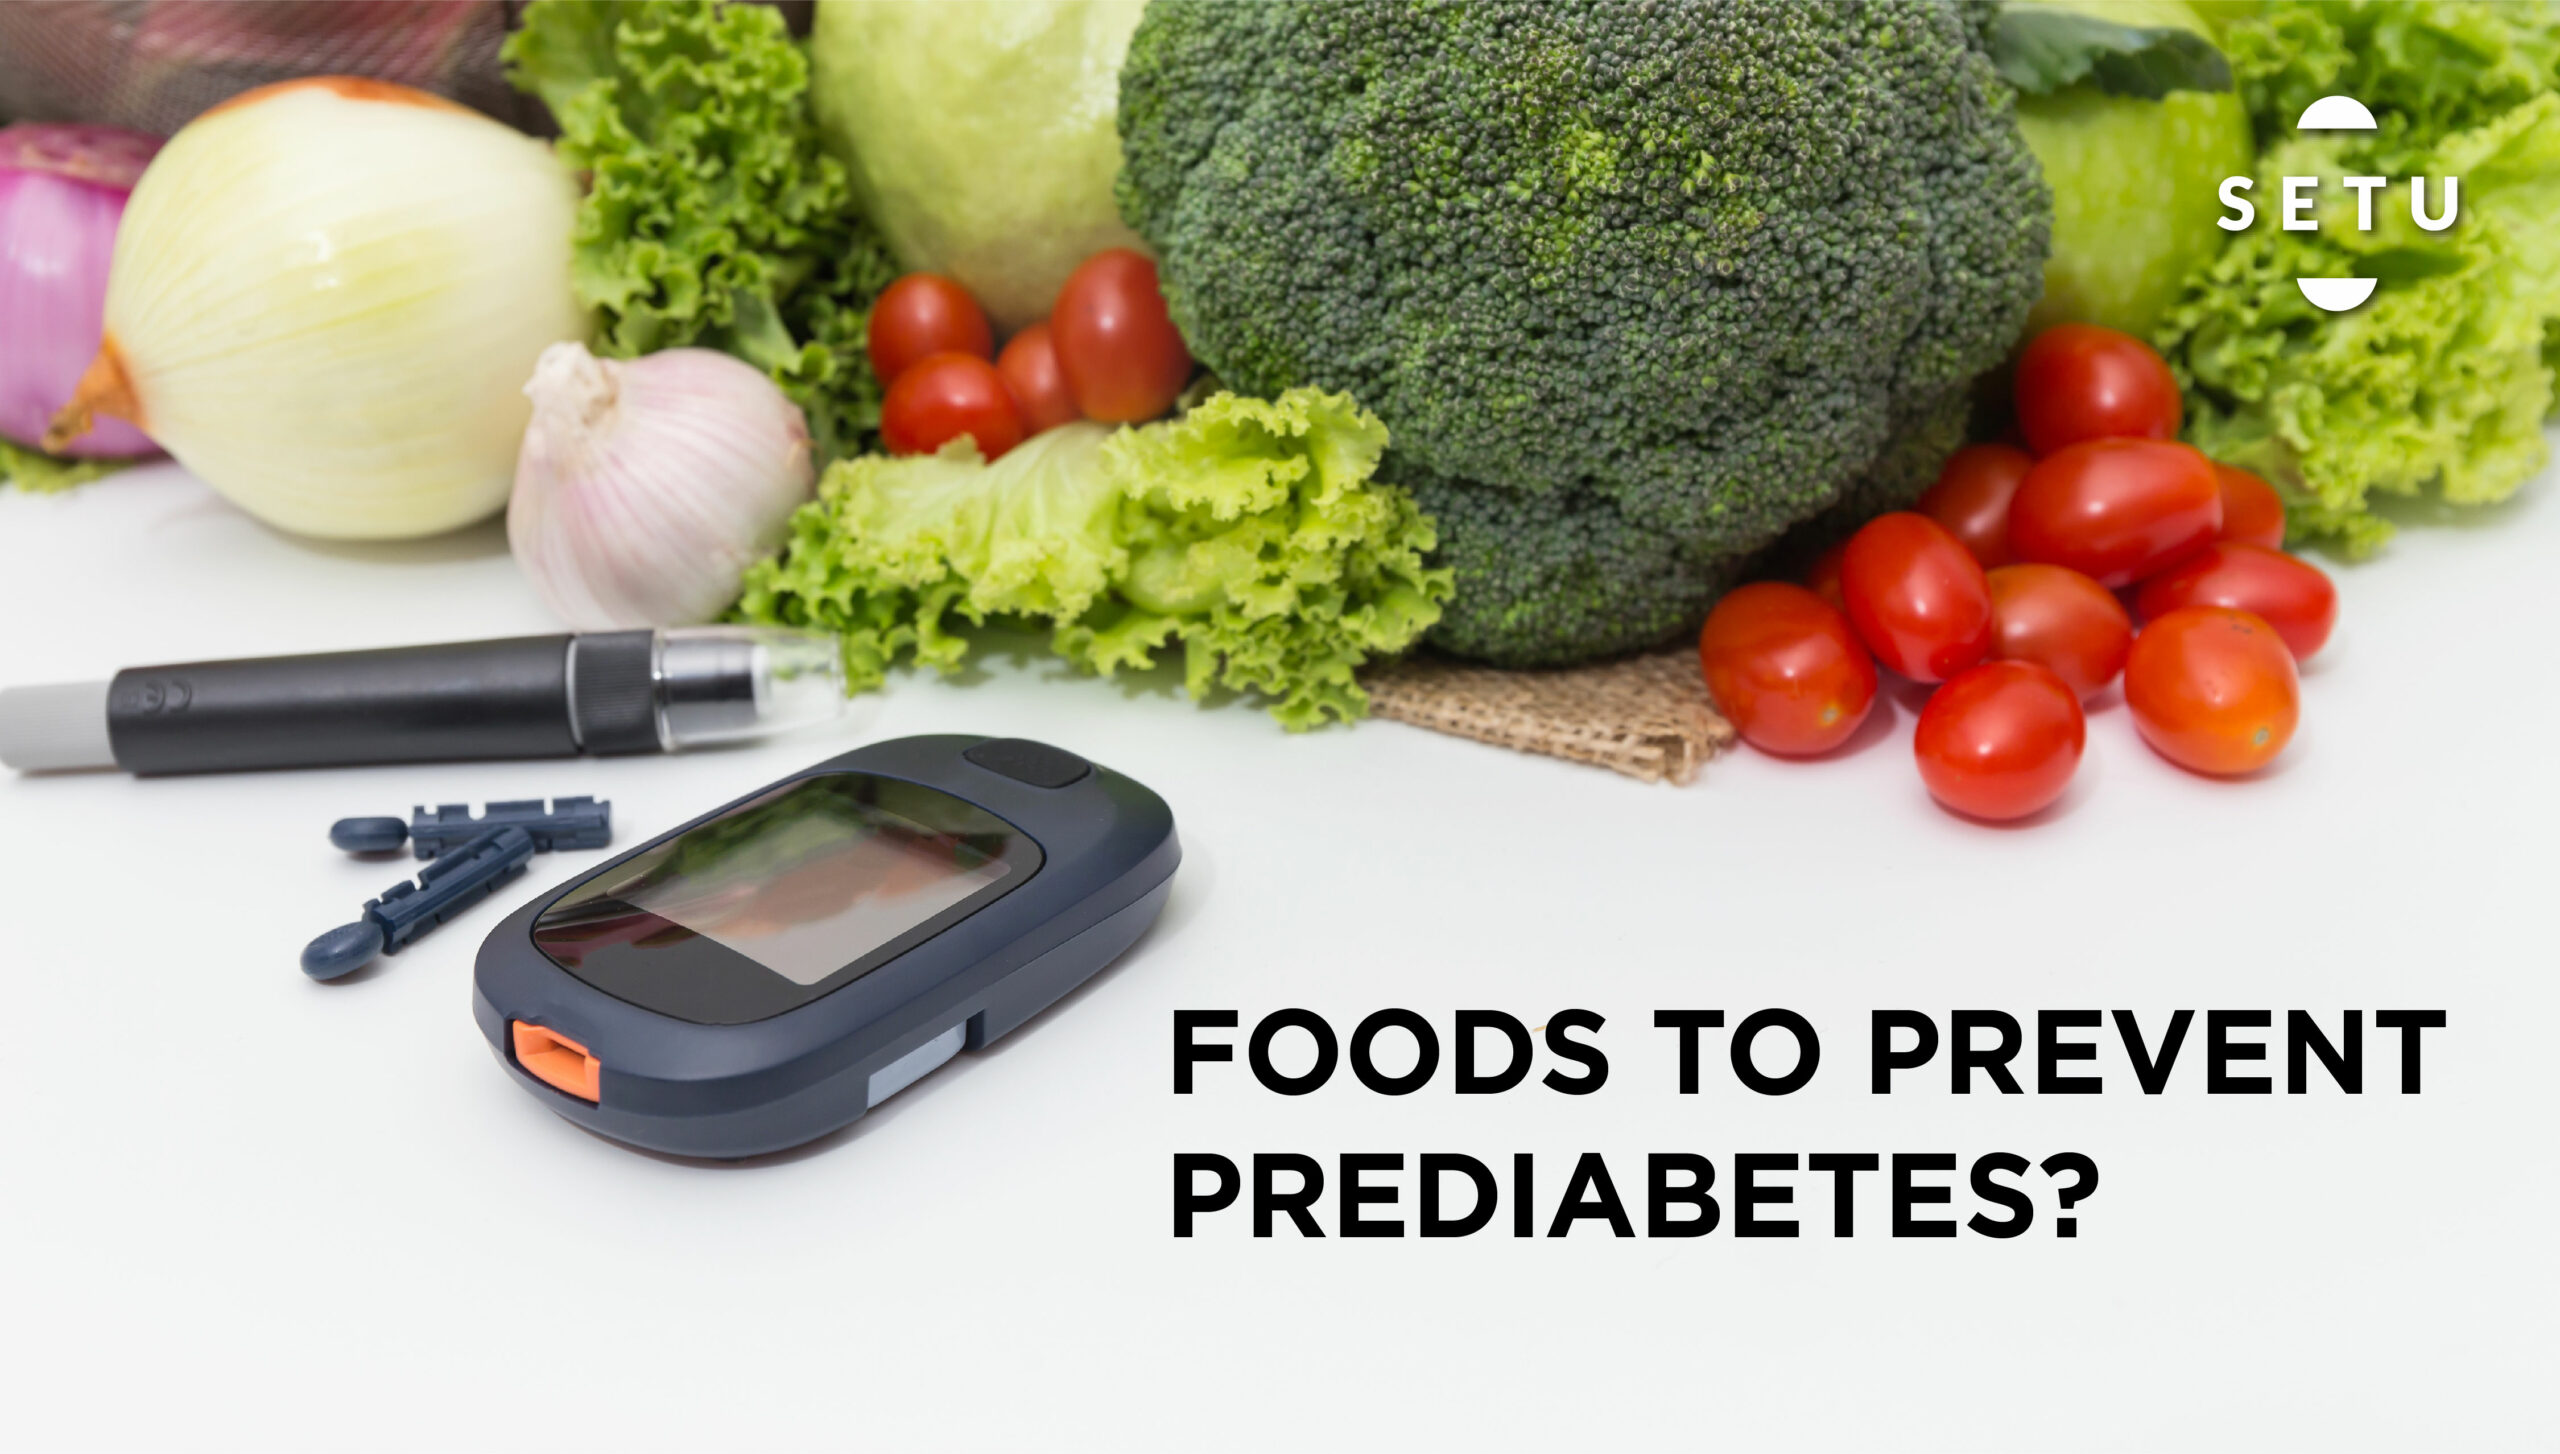 Foods to prevent prediabetes